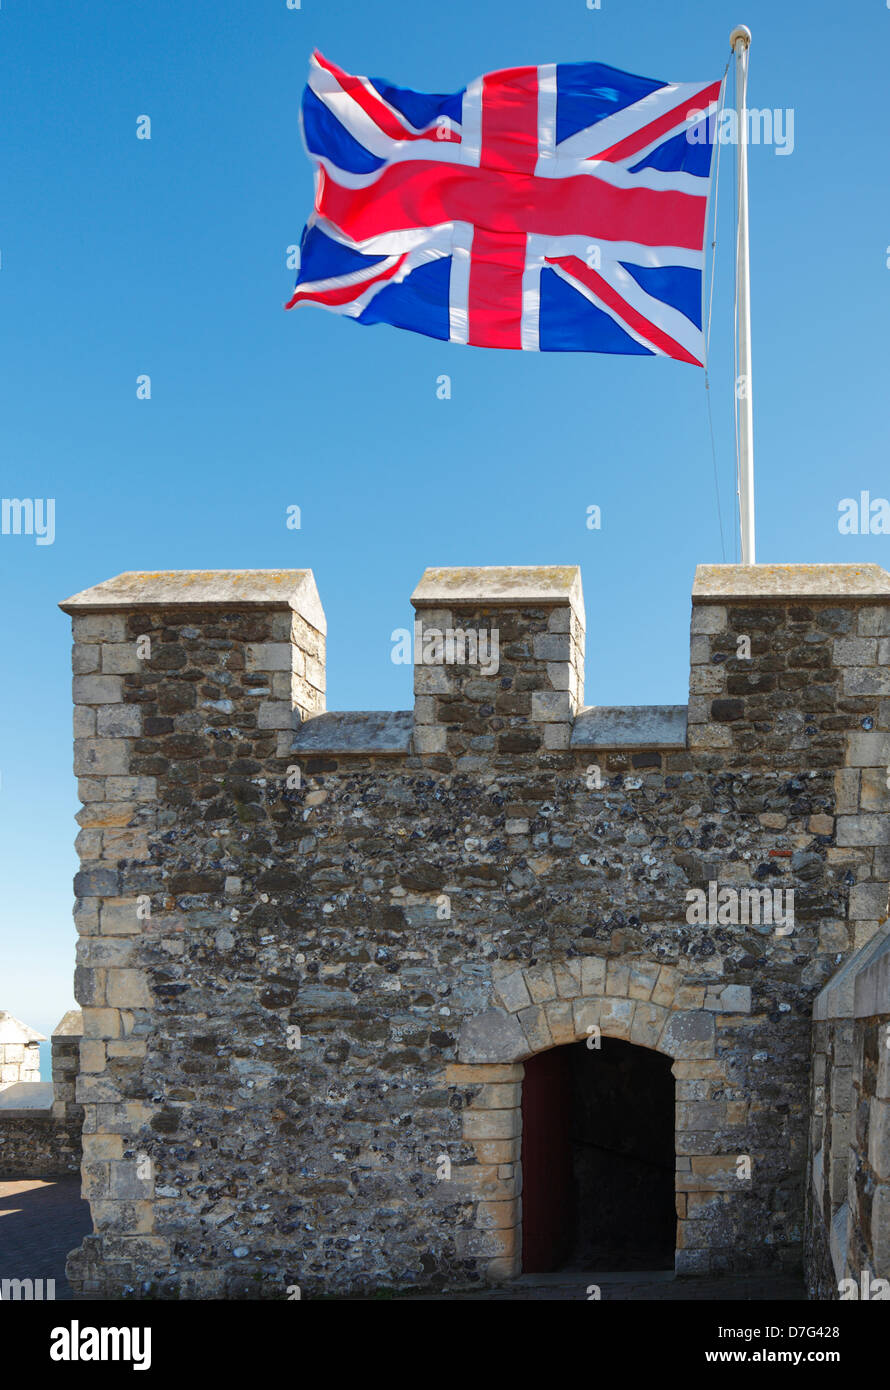 Union Jack flag sul castello. Foto Stock